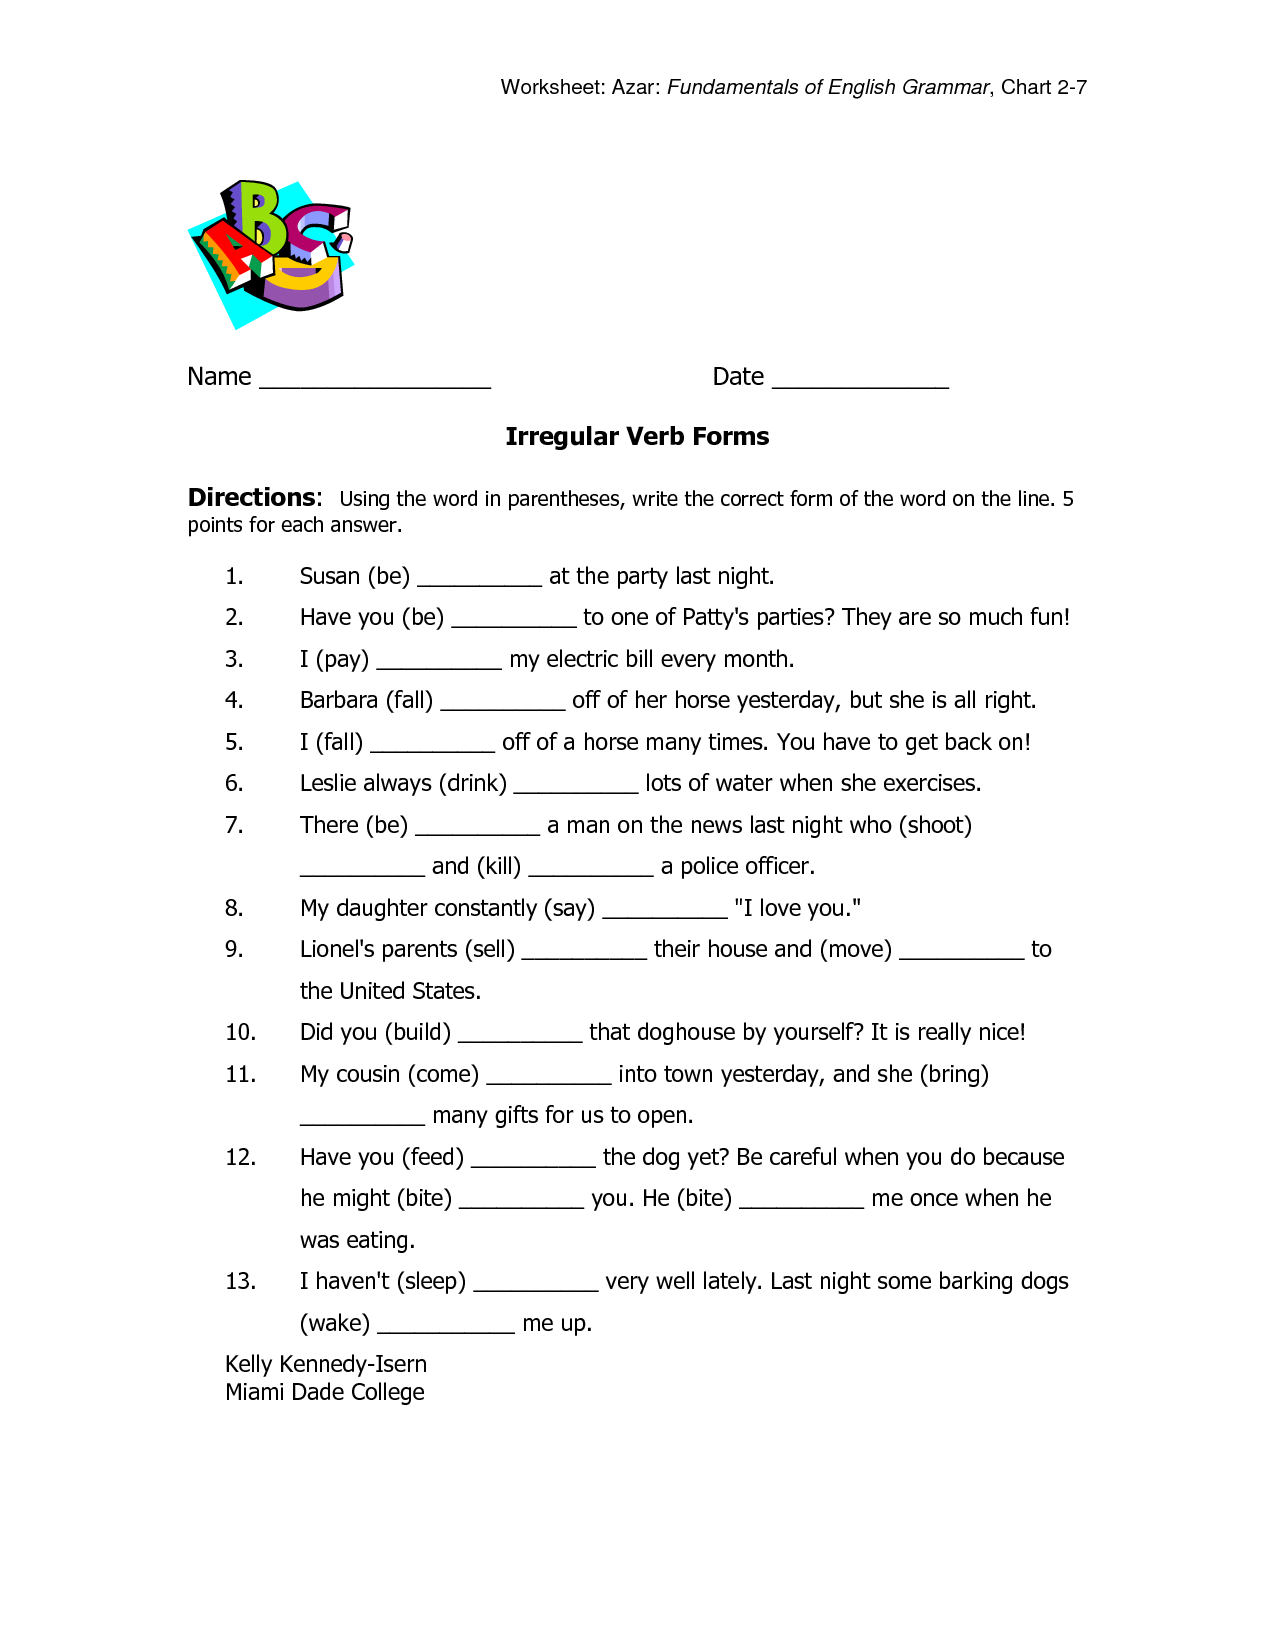 18 Best Images Of Regular Past Tense Verbs Worksheets 2nd Grade Past Tense Verbs Worksheets